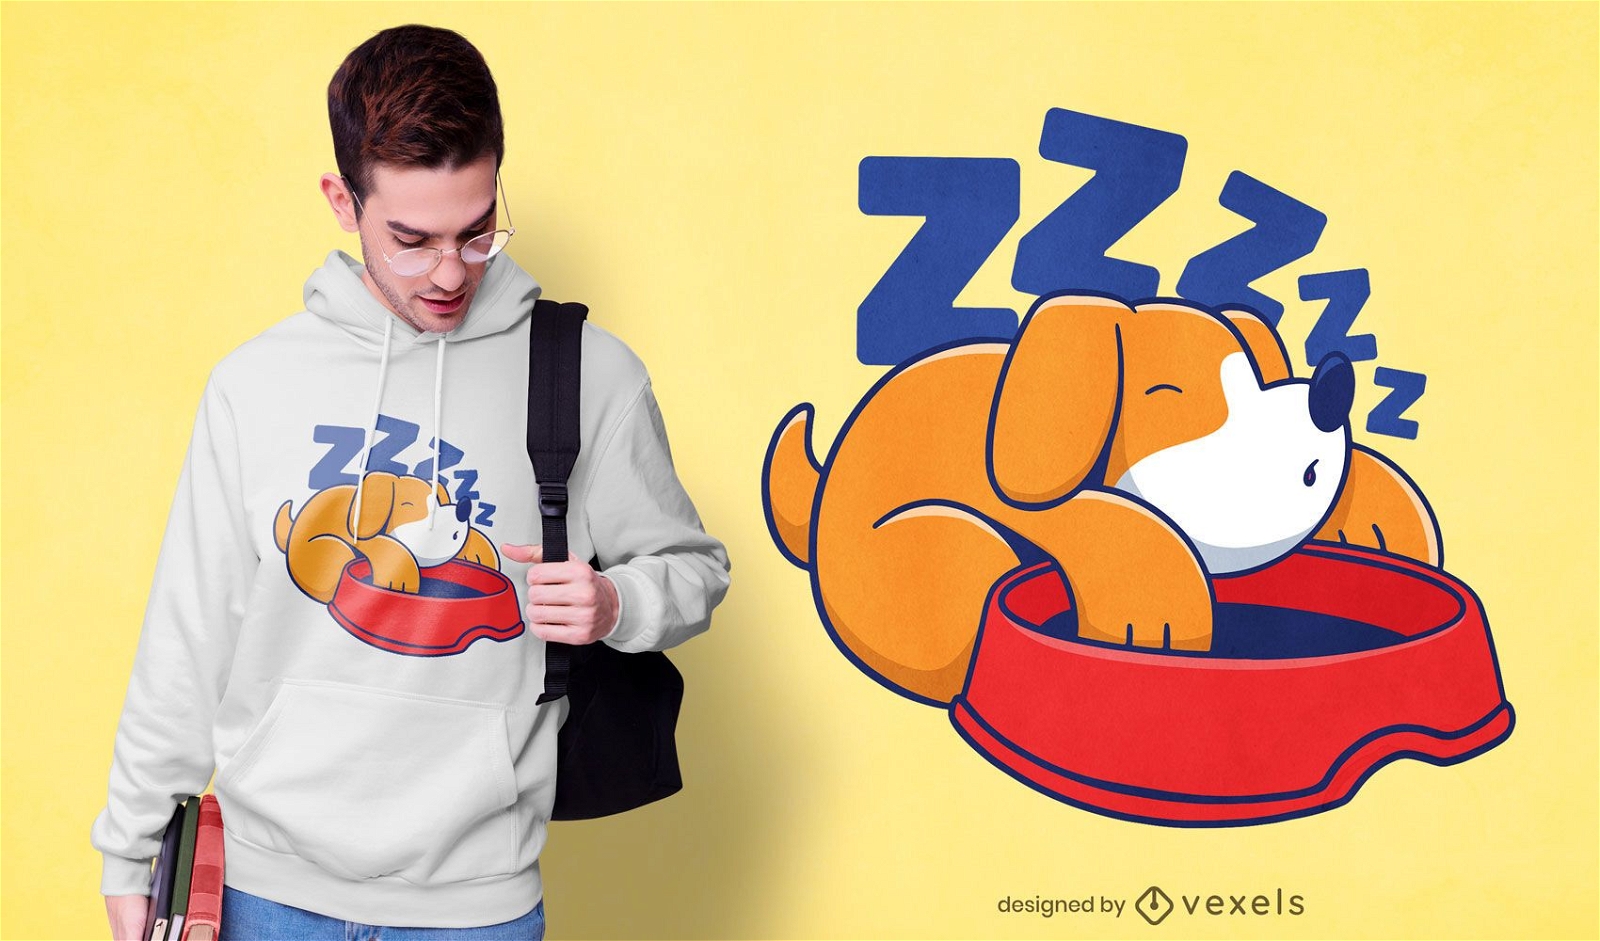 Sleeping dog t-shirt design